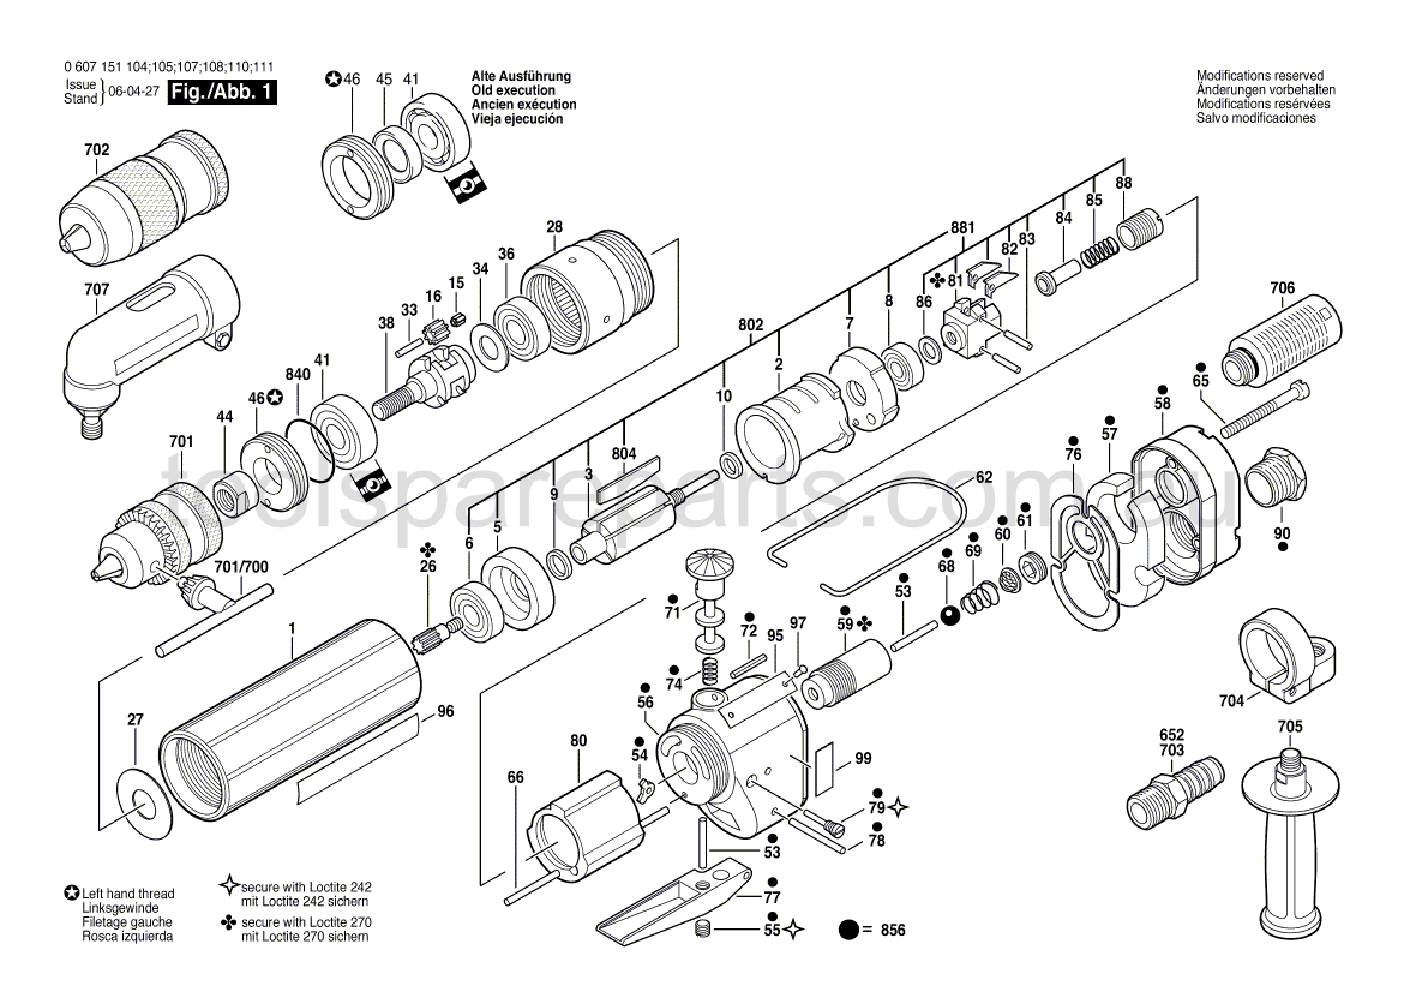 Bosch 370 WATT-SERIE 0607151105  Diagram 1